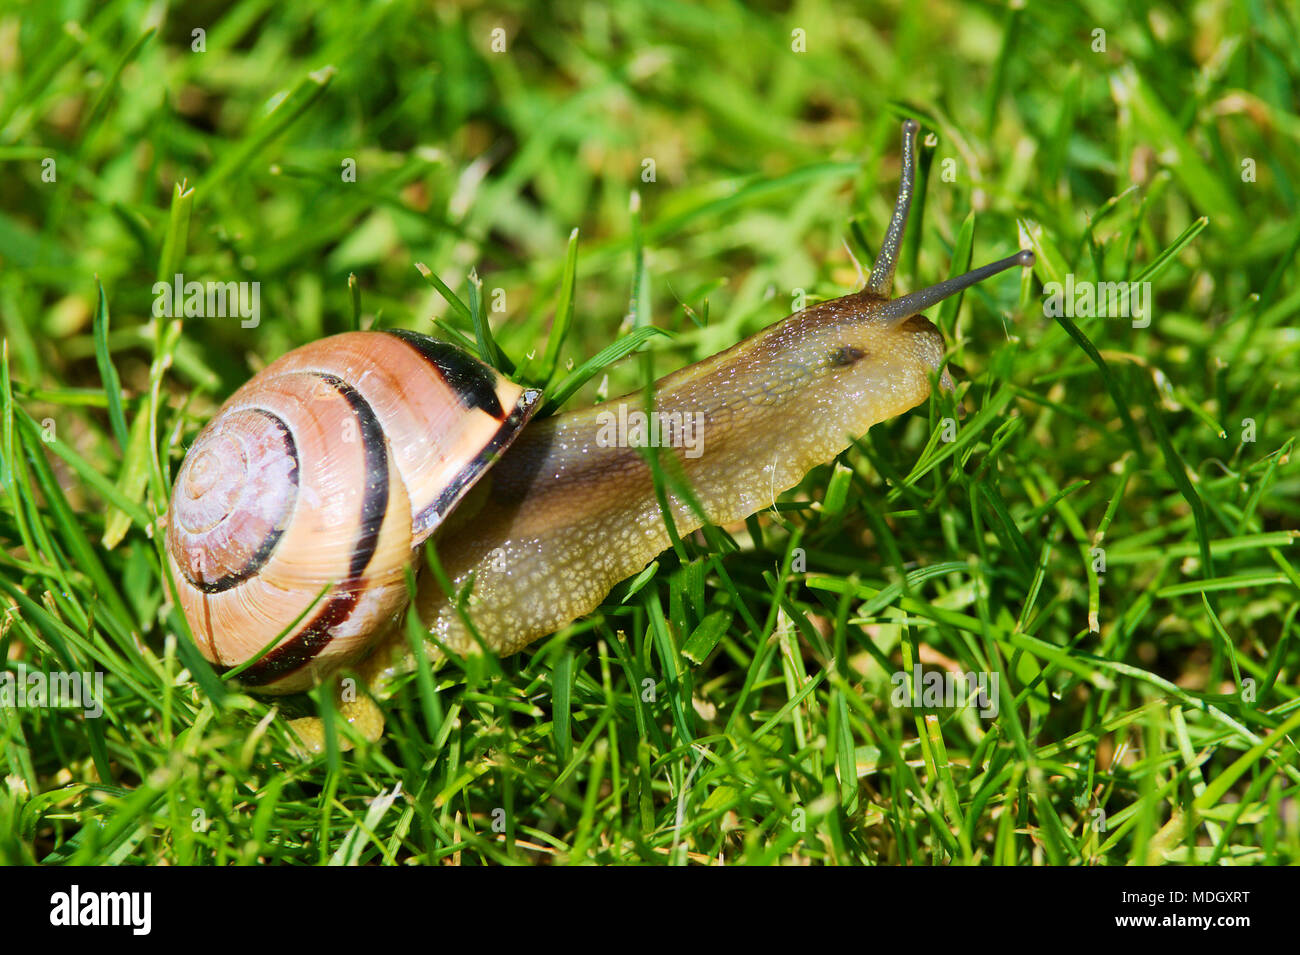 Grove snail or brown-lipped snail, Cepaea nemoralis, sliding through fresh green grass. Closeup of land snail with spiral shell on meadow. Stock Photo